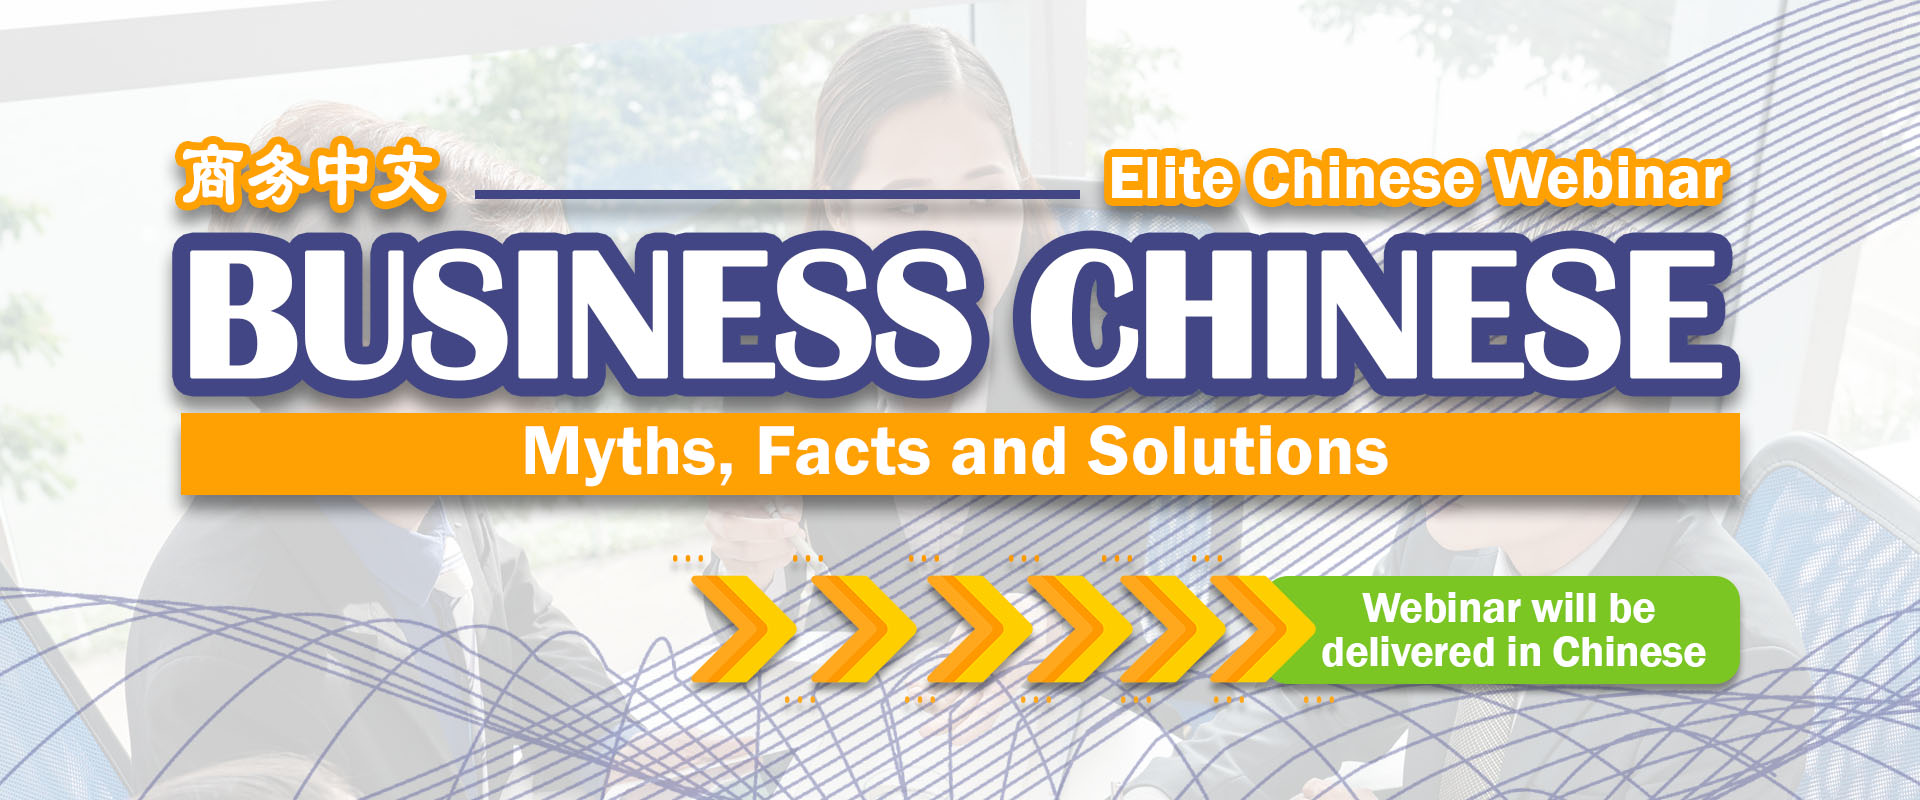 elite linguistic network business chinese webinar free-desktop banner